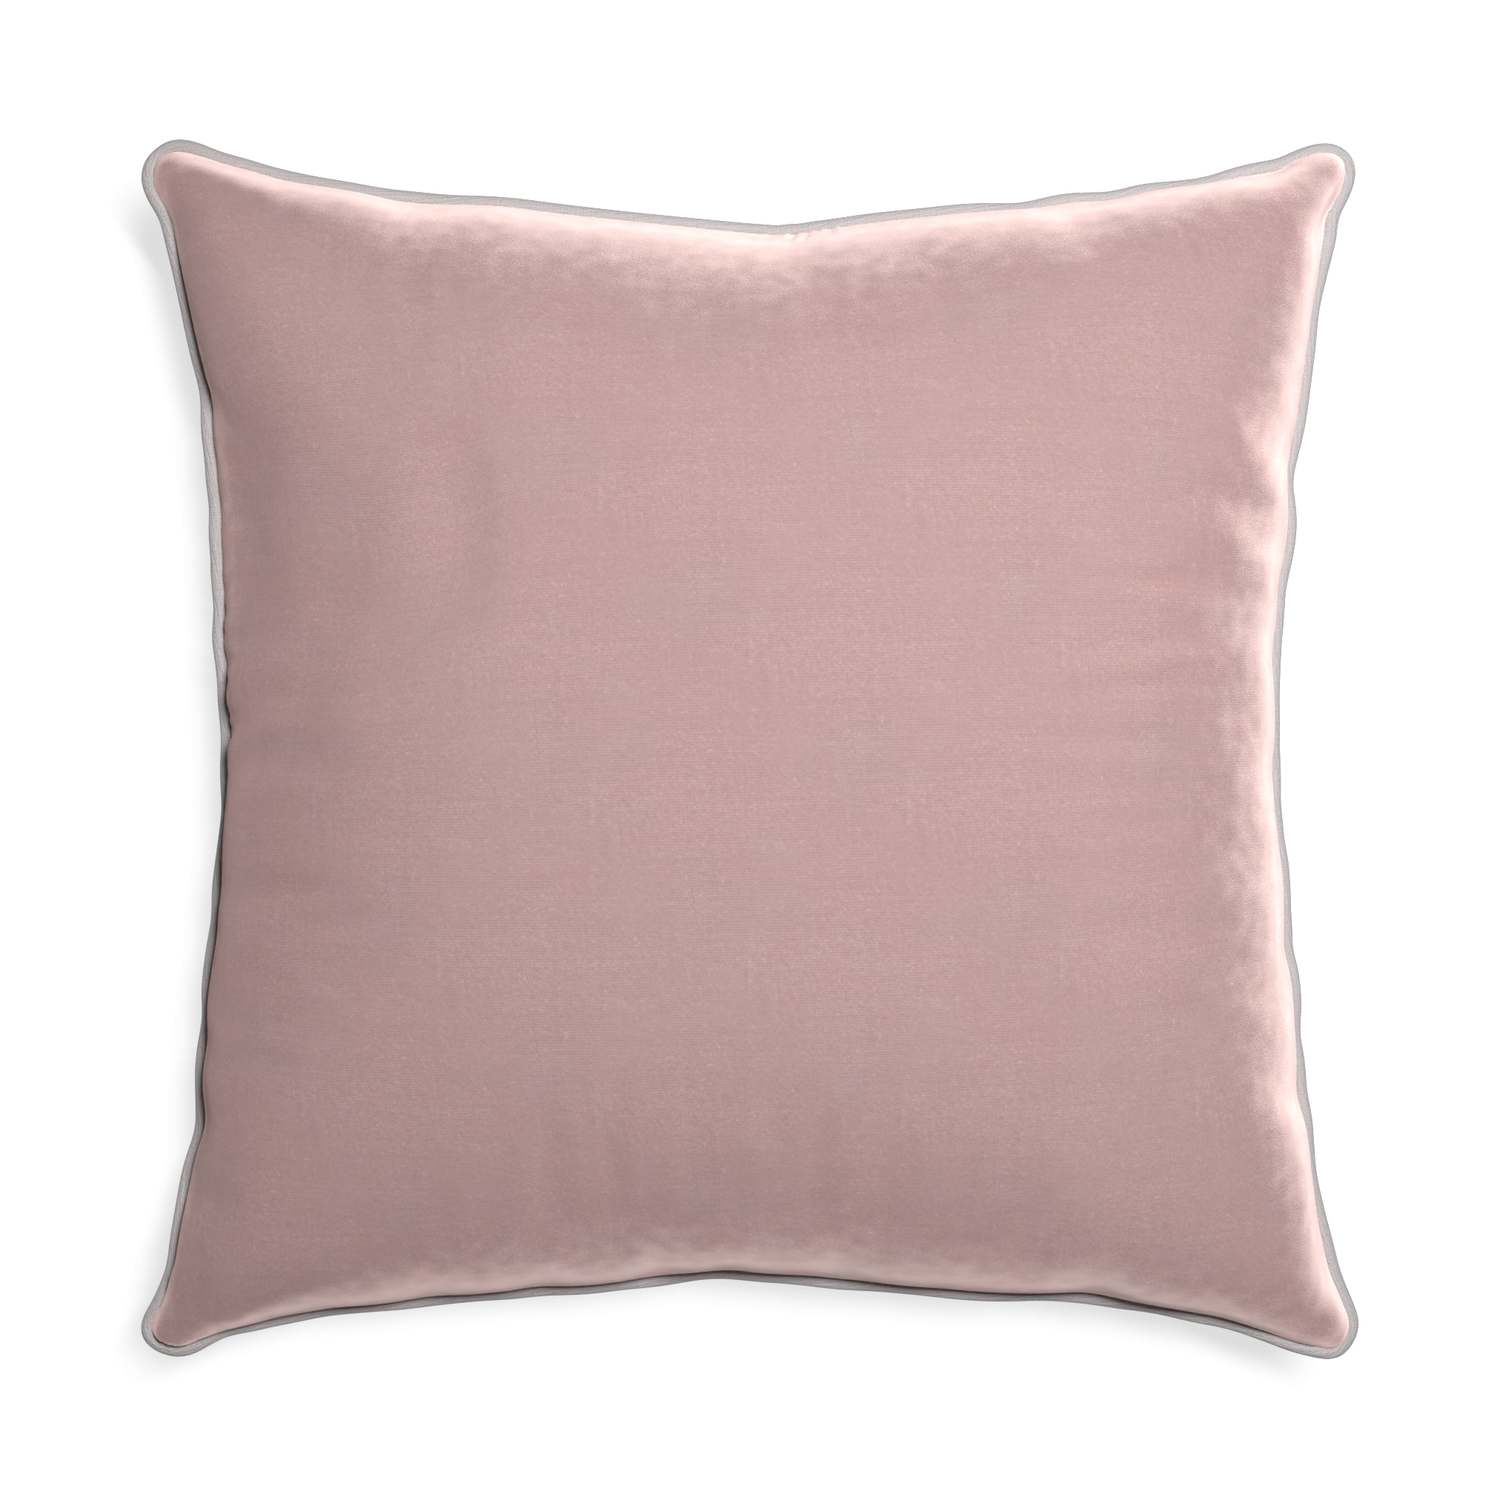 Euro-sham mauve velvet custom pillow with pebble piping on white background